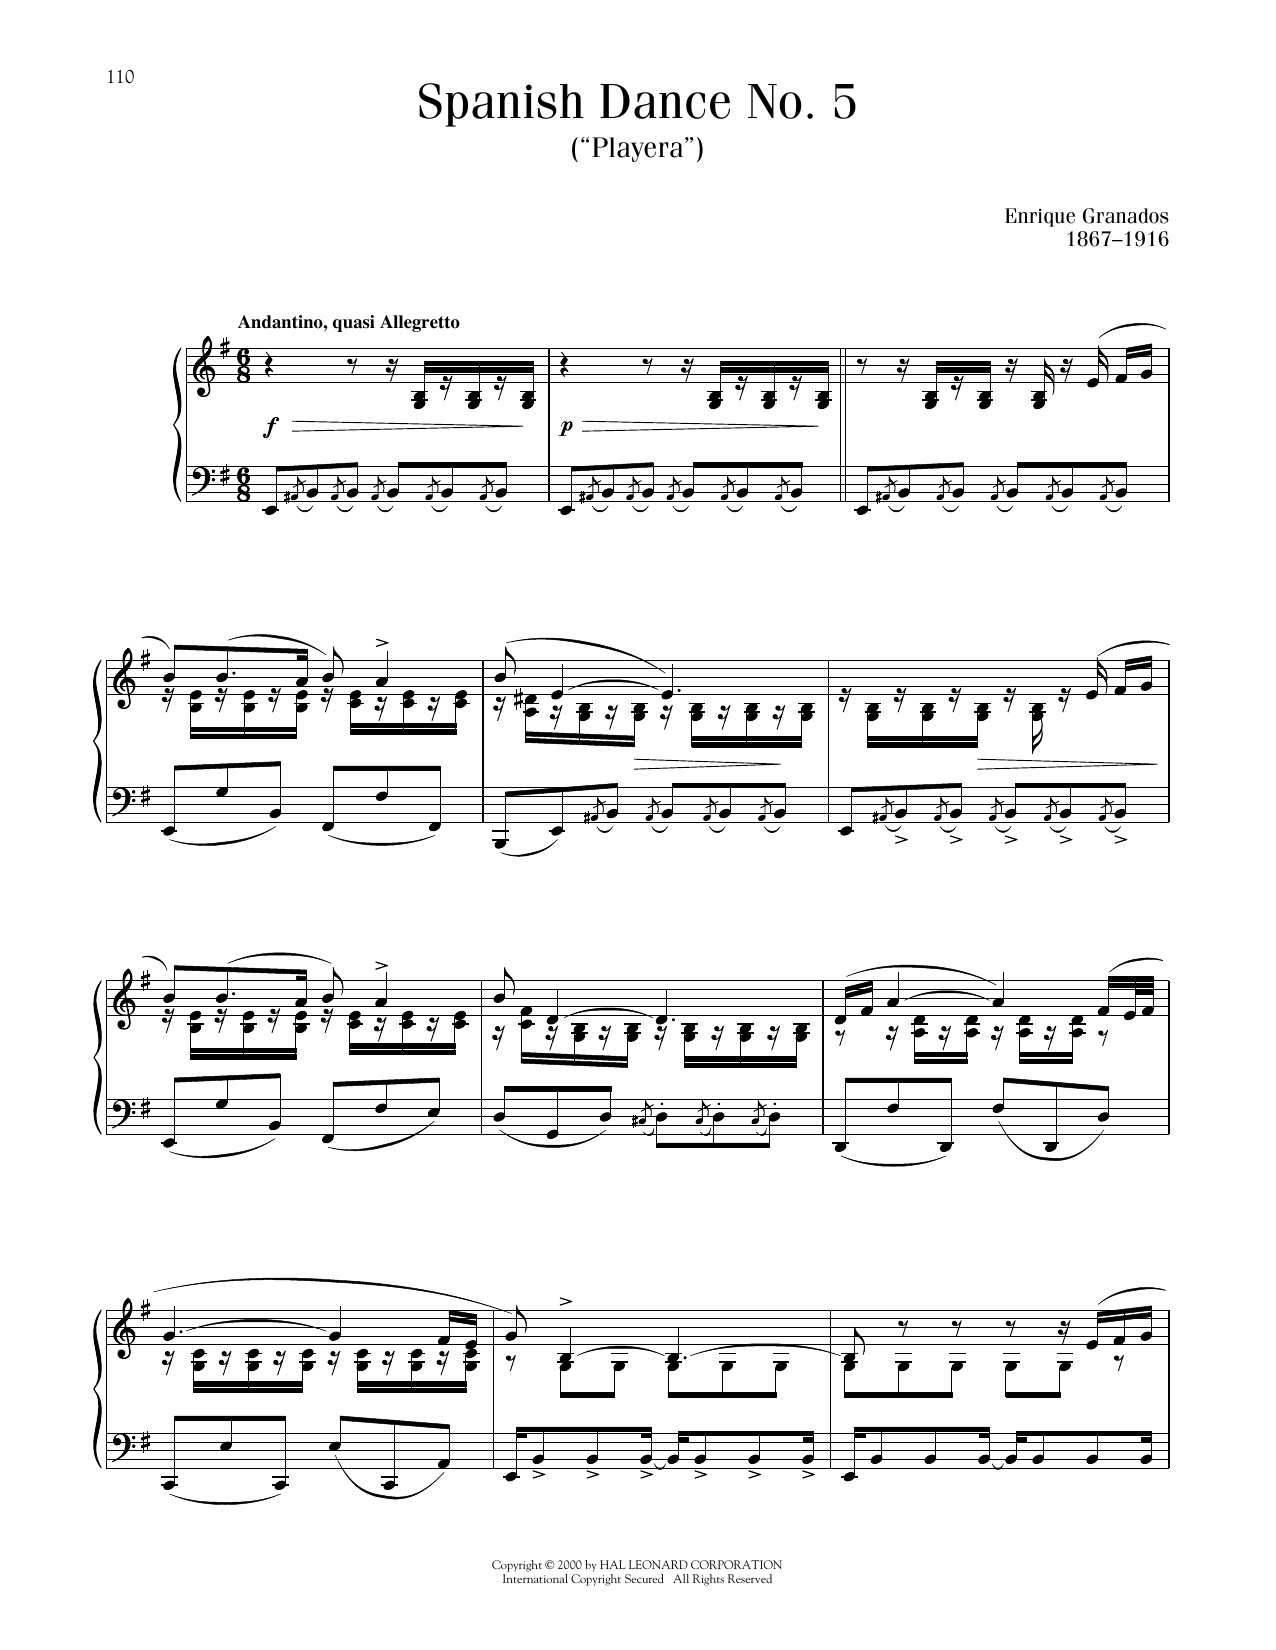 Enrique Granados Playera, Op. 5, No. 5 Sheet Music Notes & Chords for Piano Solo - Download or Print PDF